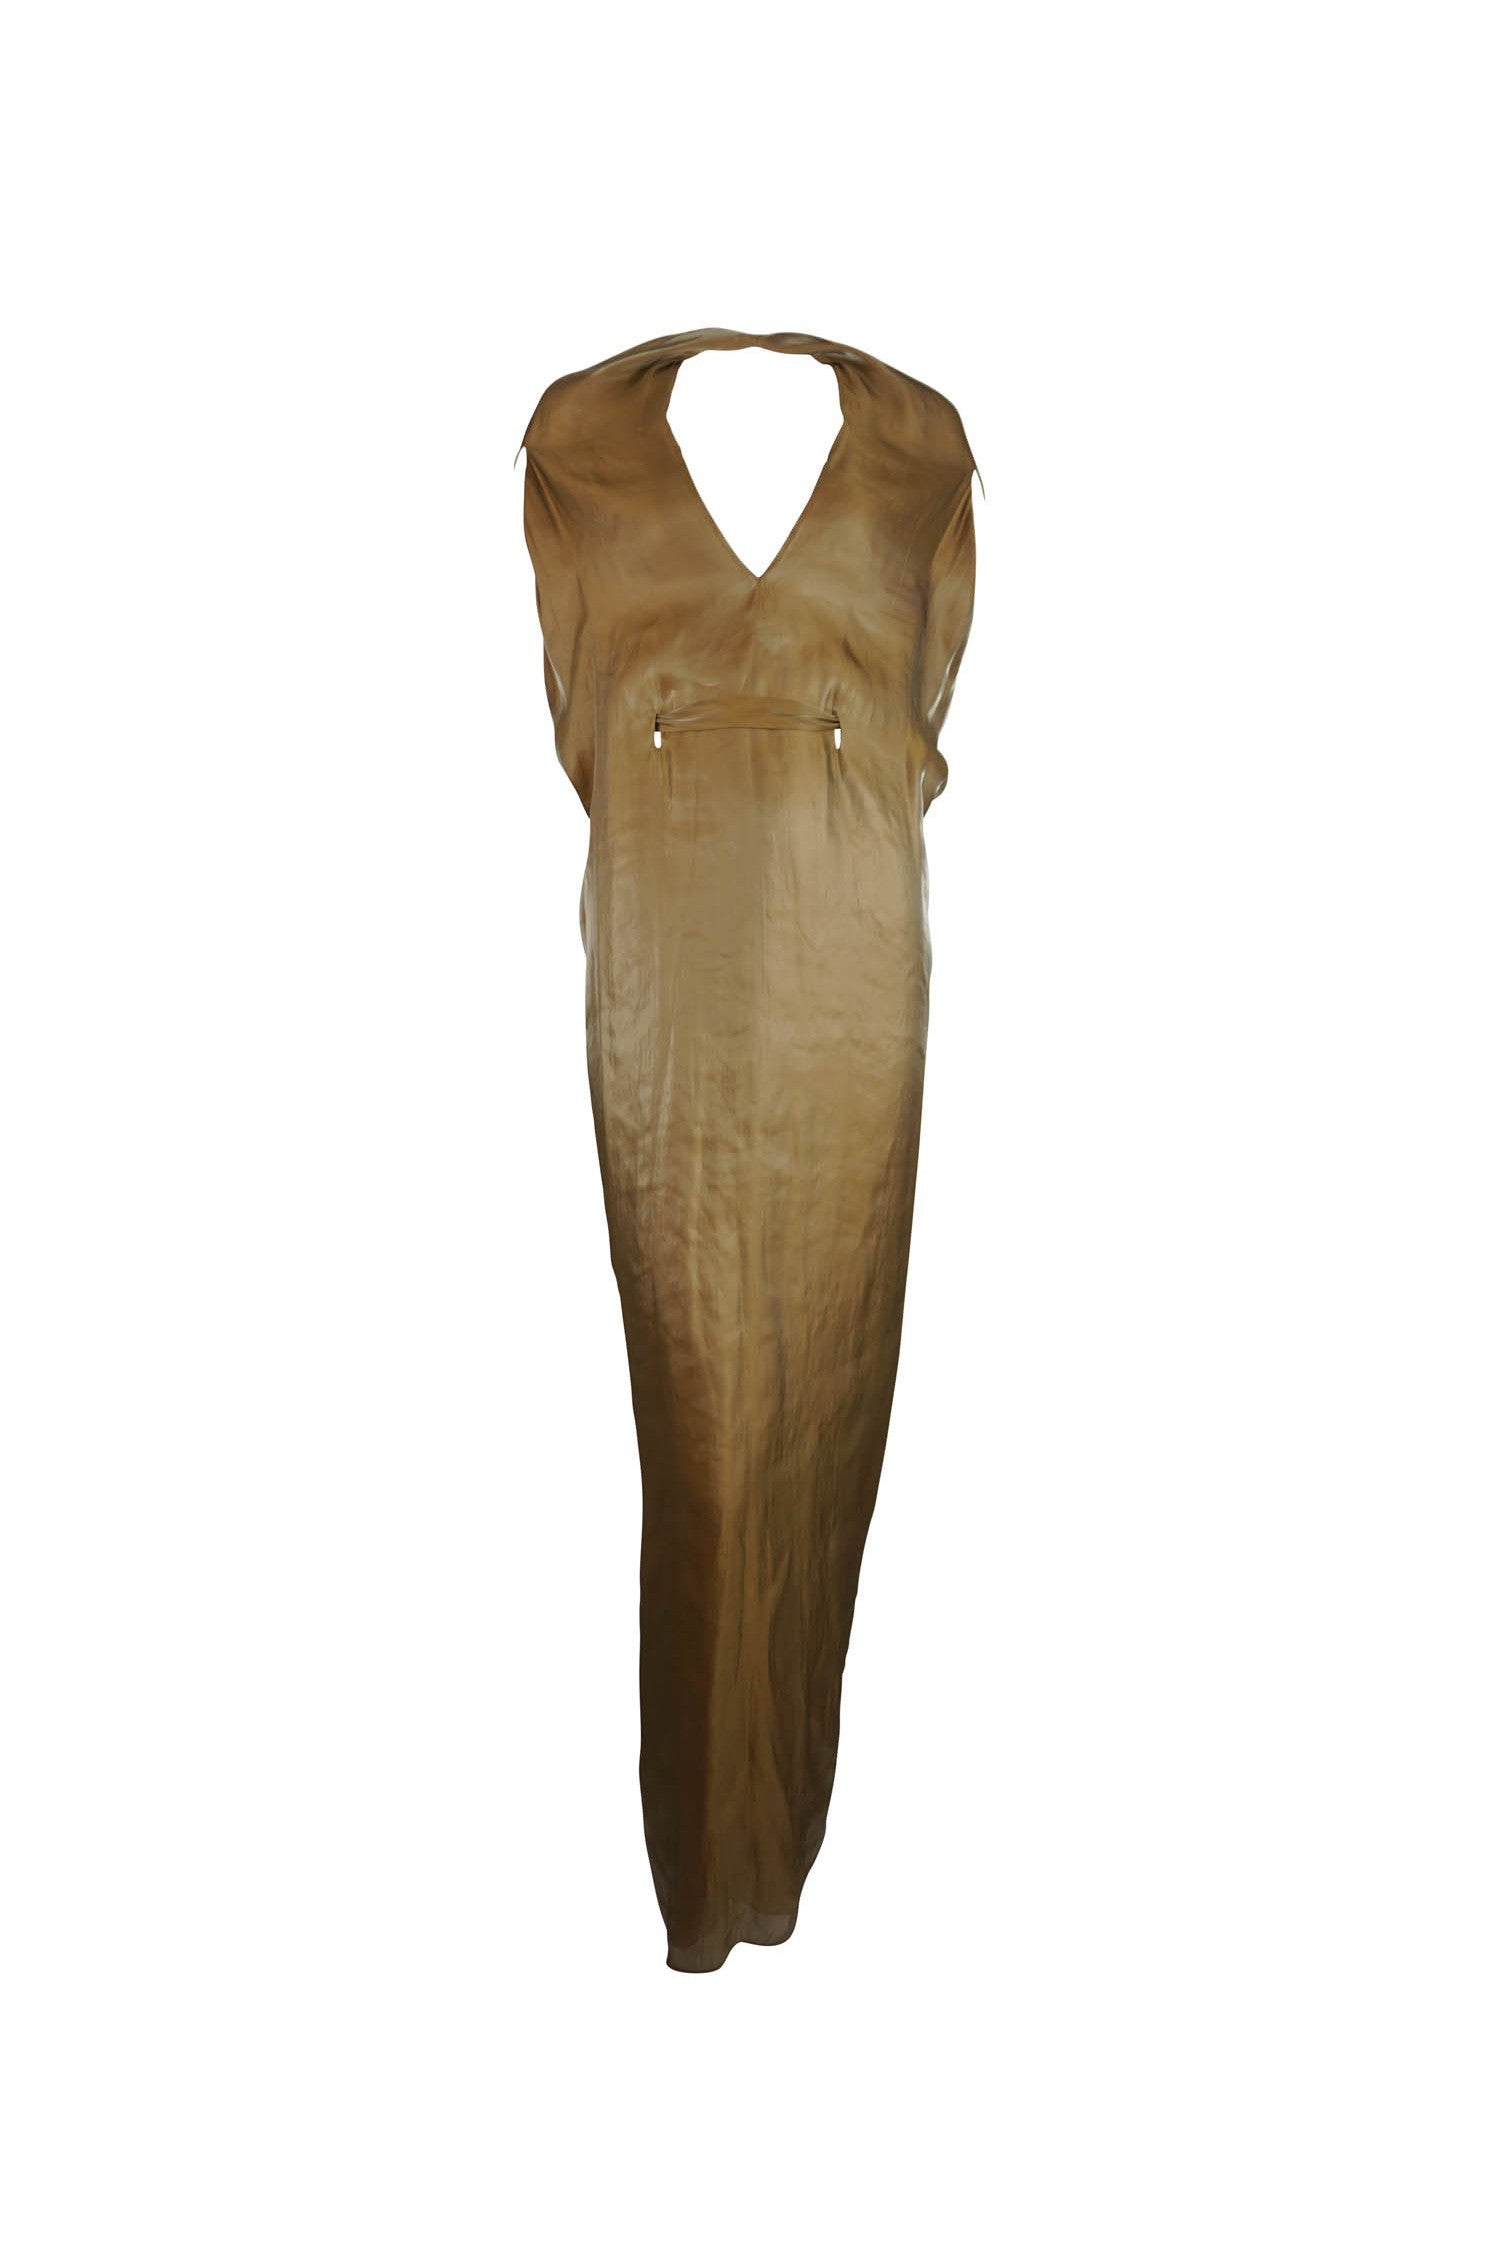 Iris Van Herpen Couture Maxi Dress 40/6 - Foxy Couture Carmel